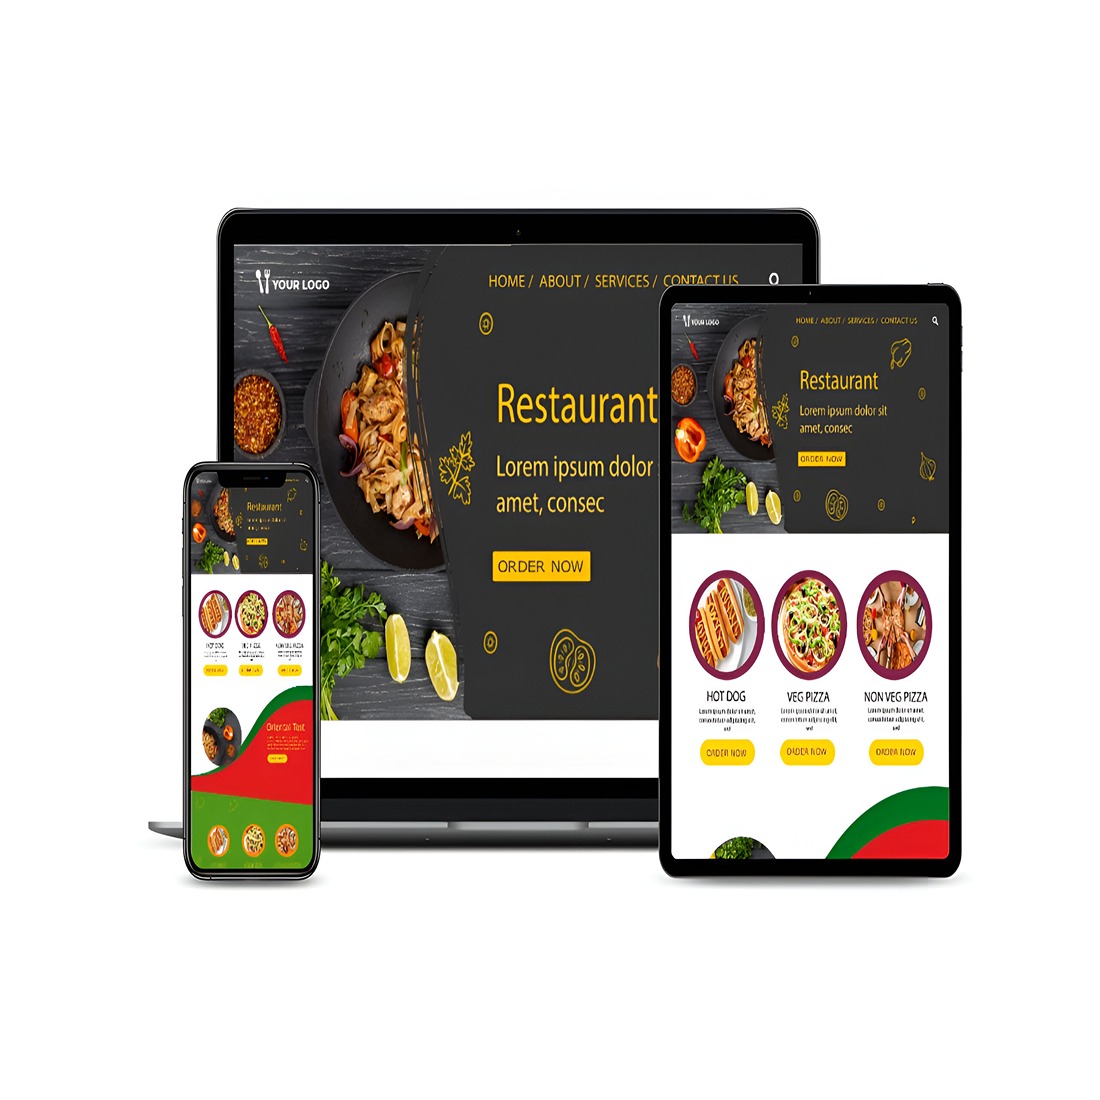 Restaurant - Website Design Template preview image.